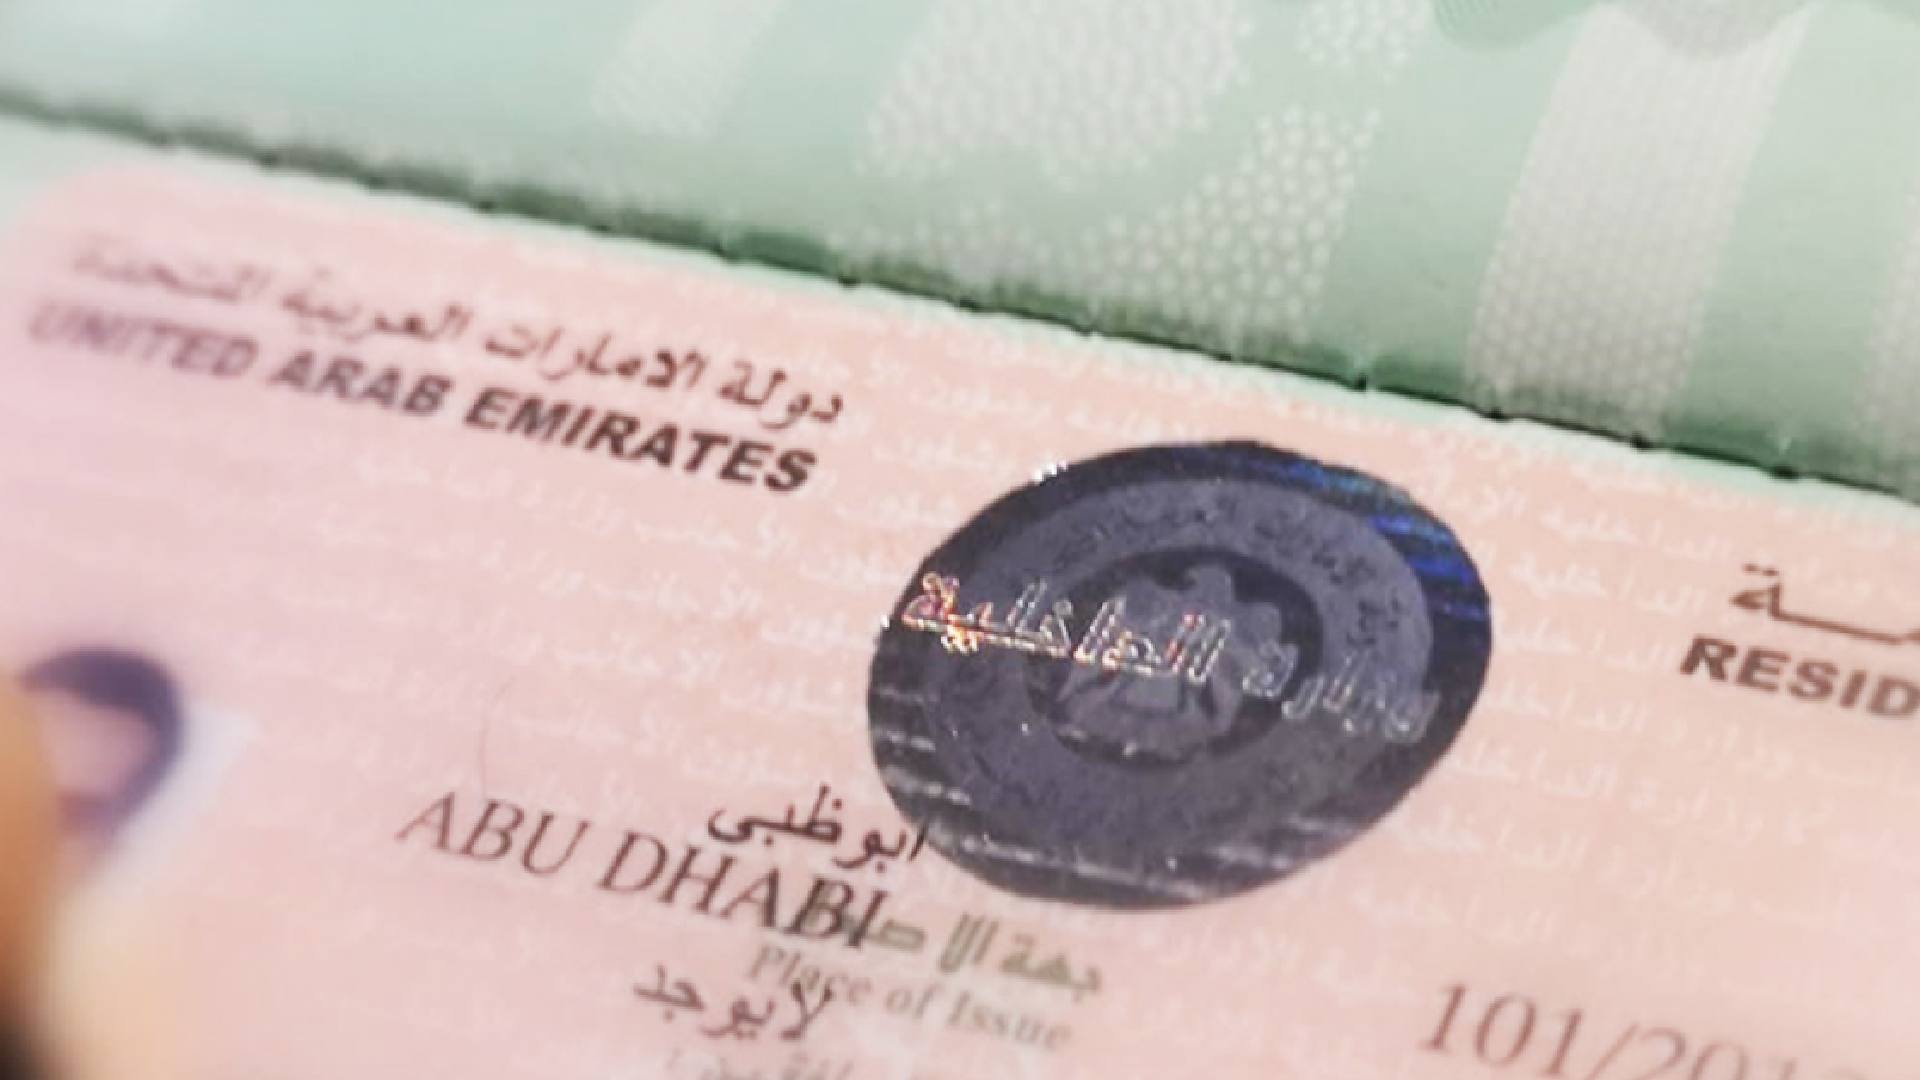 Visa Status Check Abu Dhabi